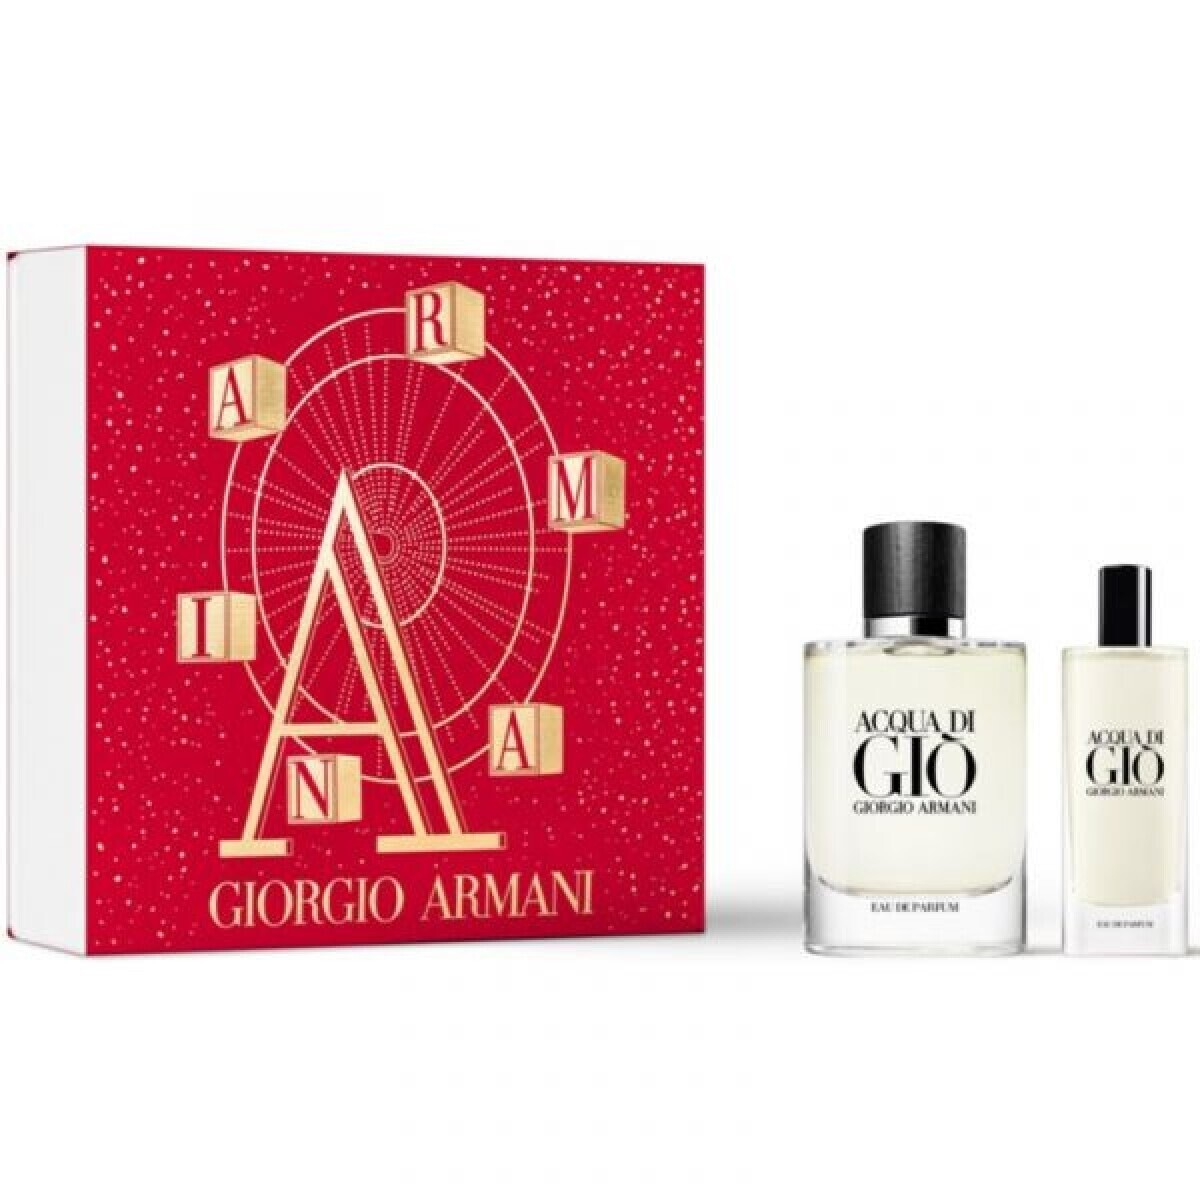 Perfume Acqua Di Gio Edp 75ml+15ml. 